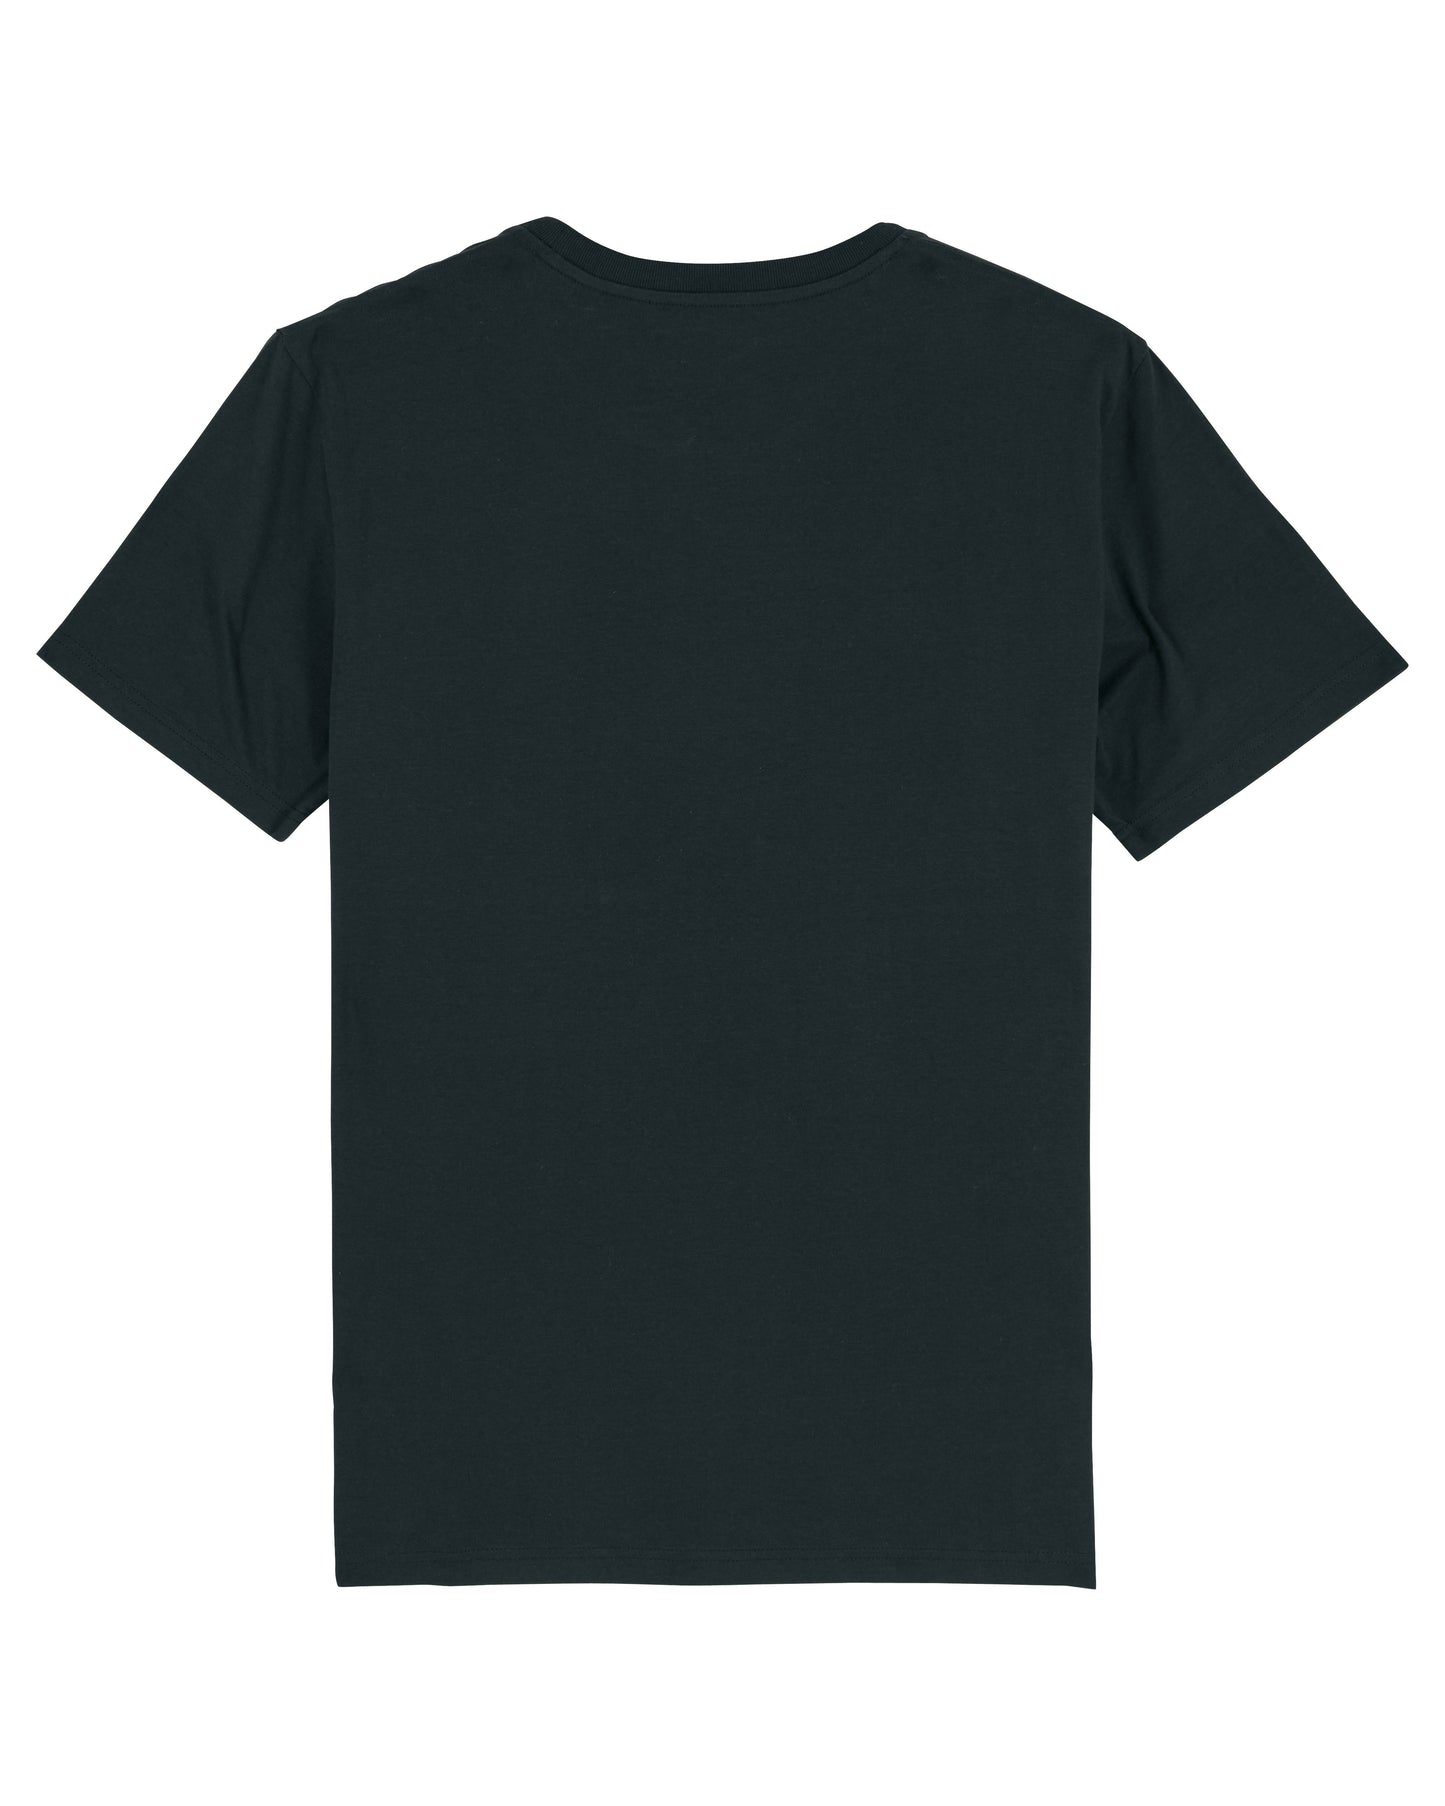 PIERRE BERGER- 100% Bio-Baumwolle Unisex T-Shirt Black and White Minimalist Typography